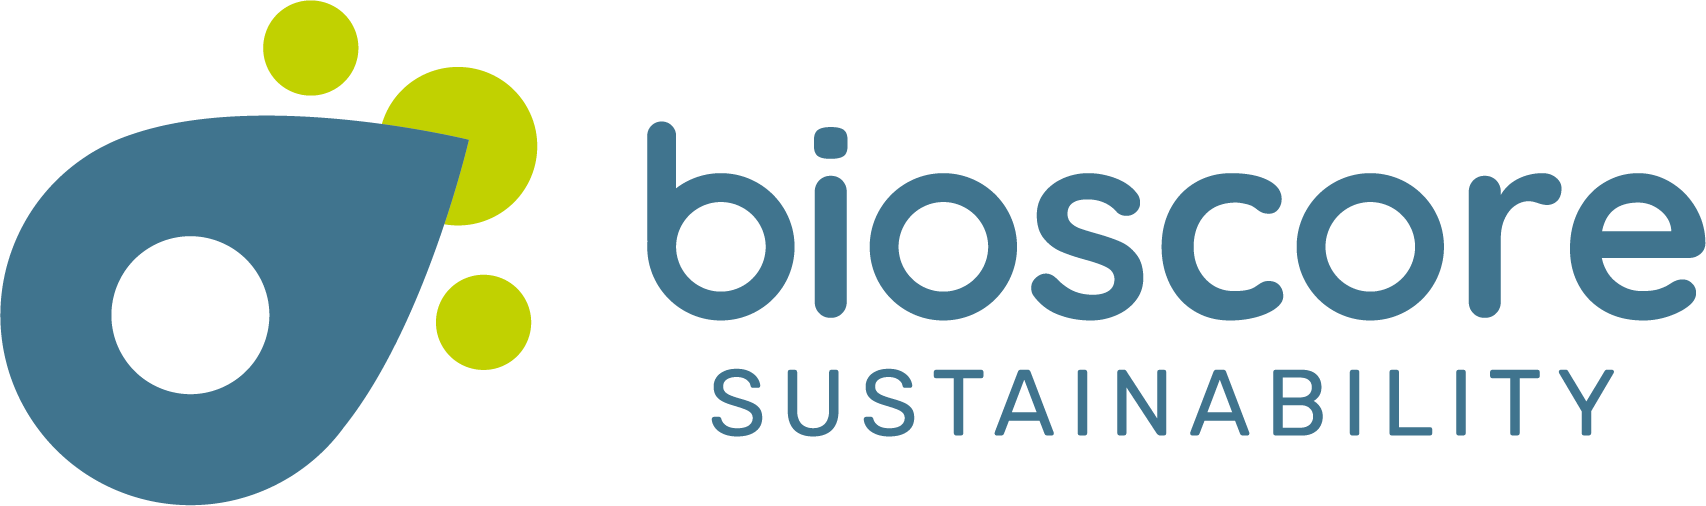 Sustainability Certificate Bioscore